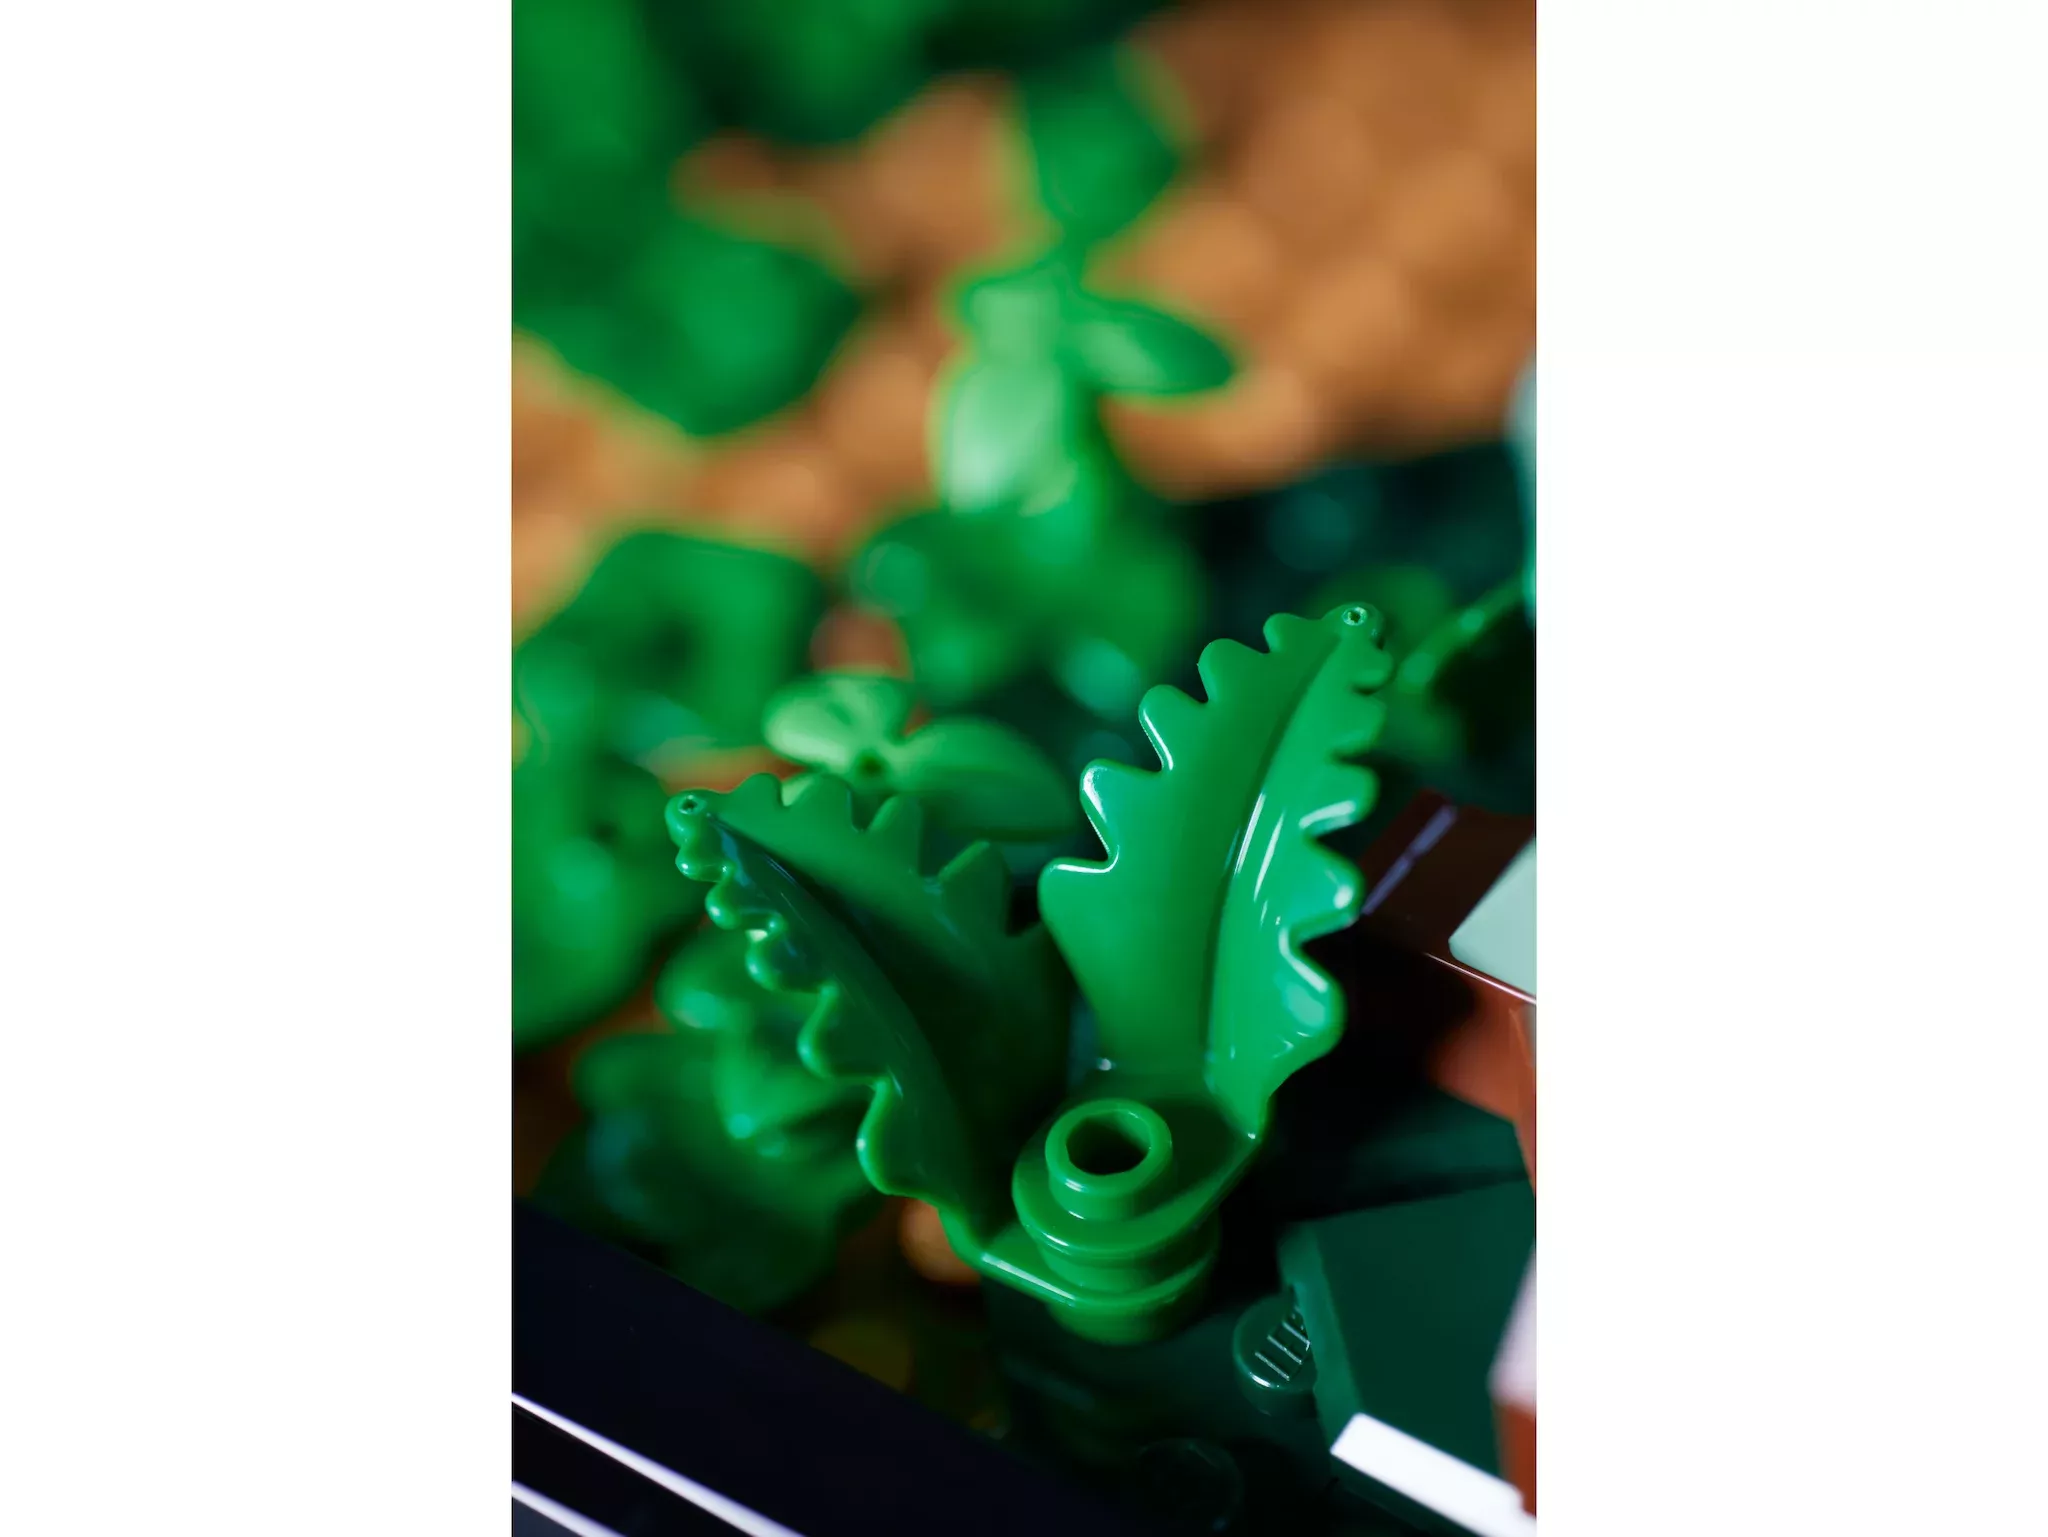 LEGO Verfolgungsjagd auf Endor™ – Diorama